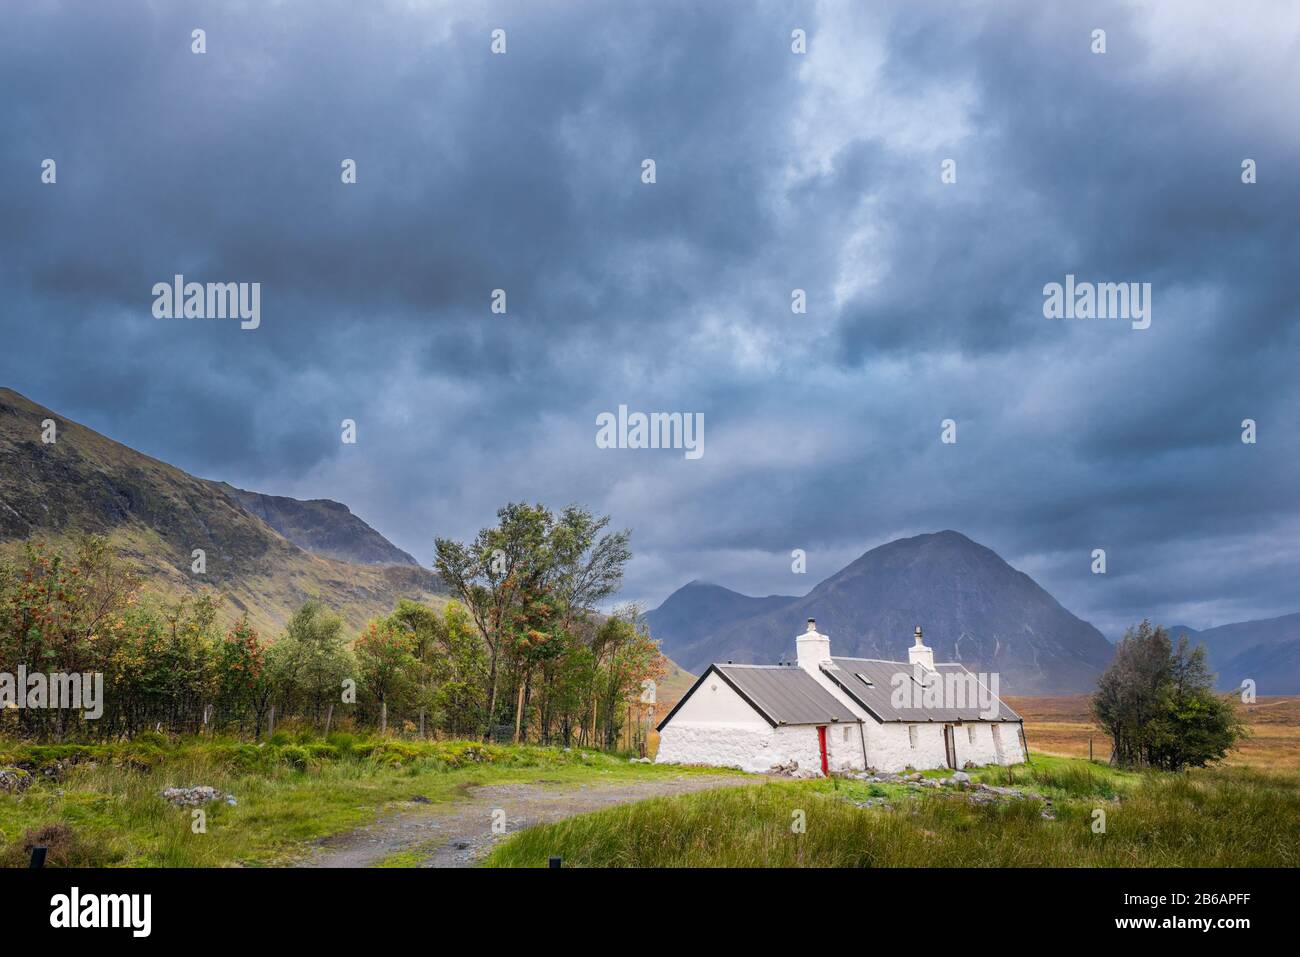 Blackrock Cottage under stormy skies with mountains in the background. Glencoe, Scottish Highlands, United Kingdom Stock Photo